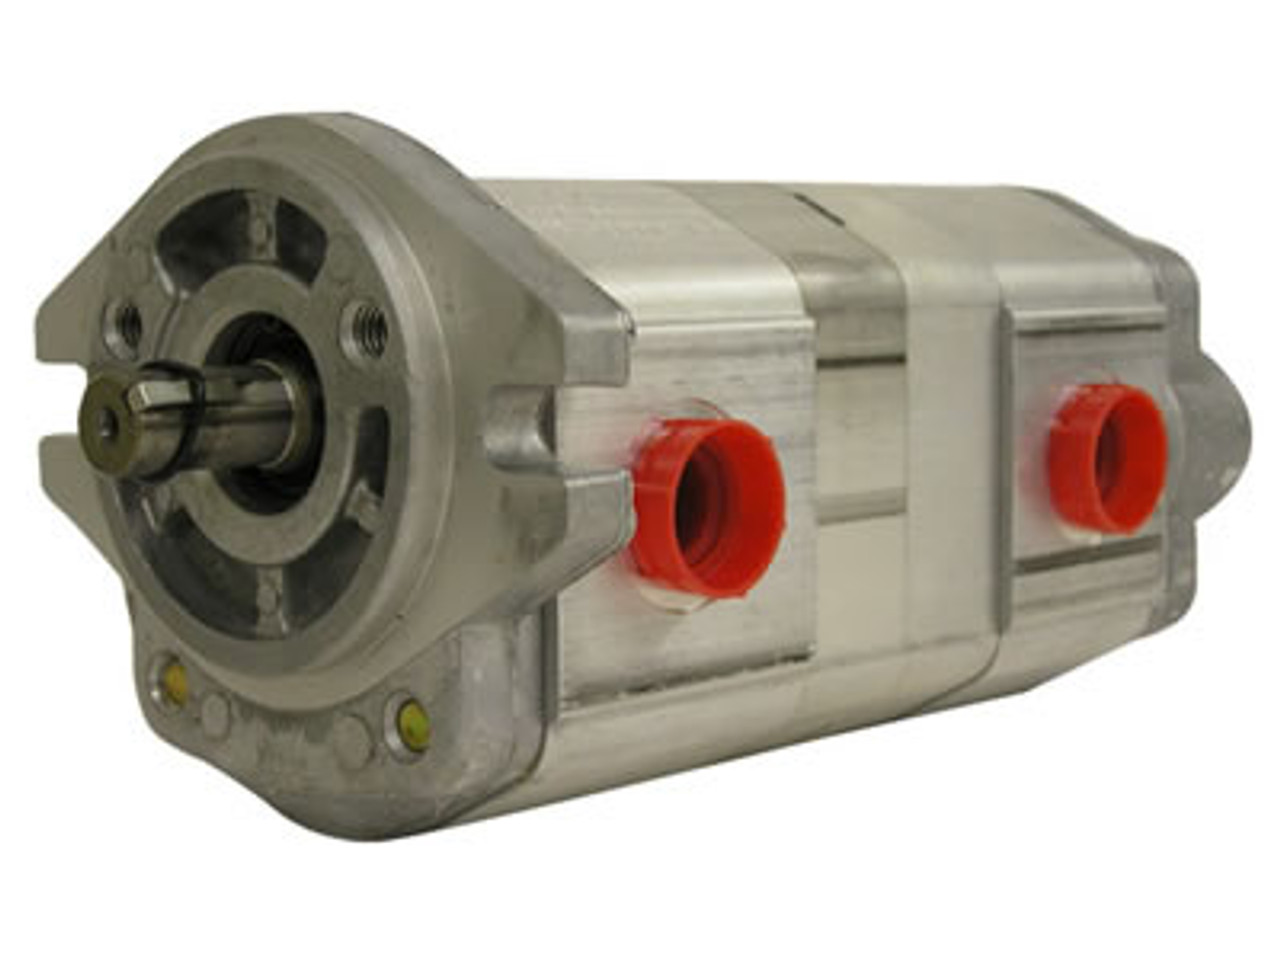 2DG1BU1411R Honor Pumps USA Tandem hydraulic gear pump 6.44 GPM/5.23 GPM @ 1800 RPM  Honor Pumps USA